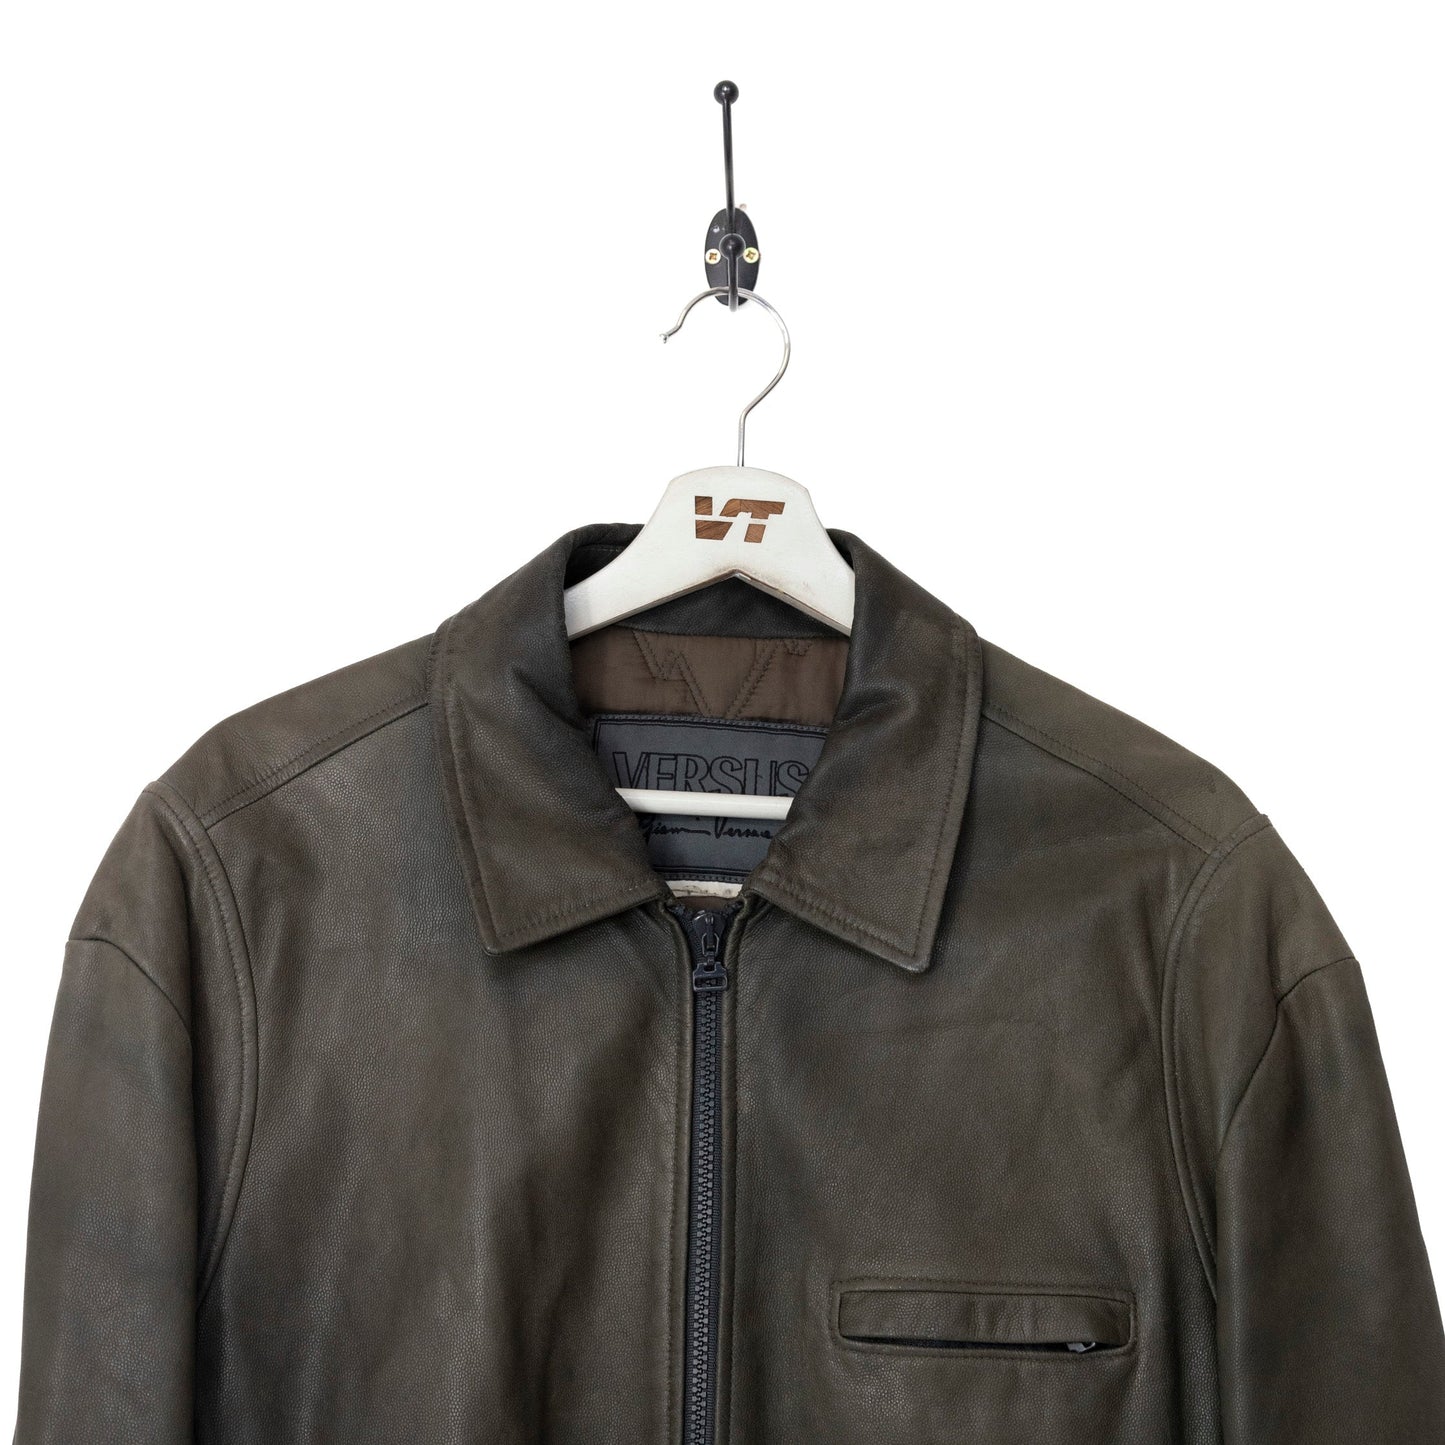 Versus Gianni Versace Olive Leather Jacket